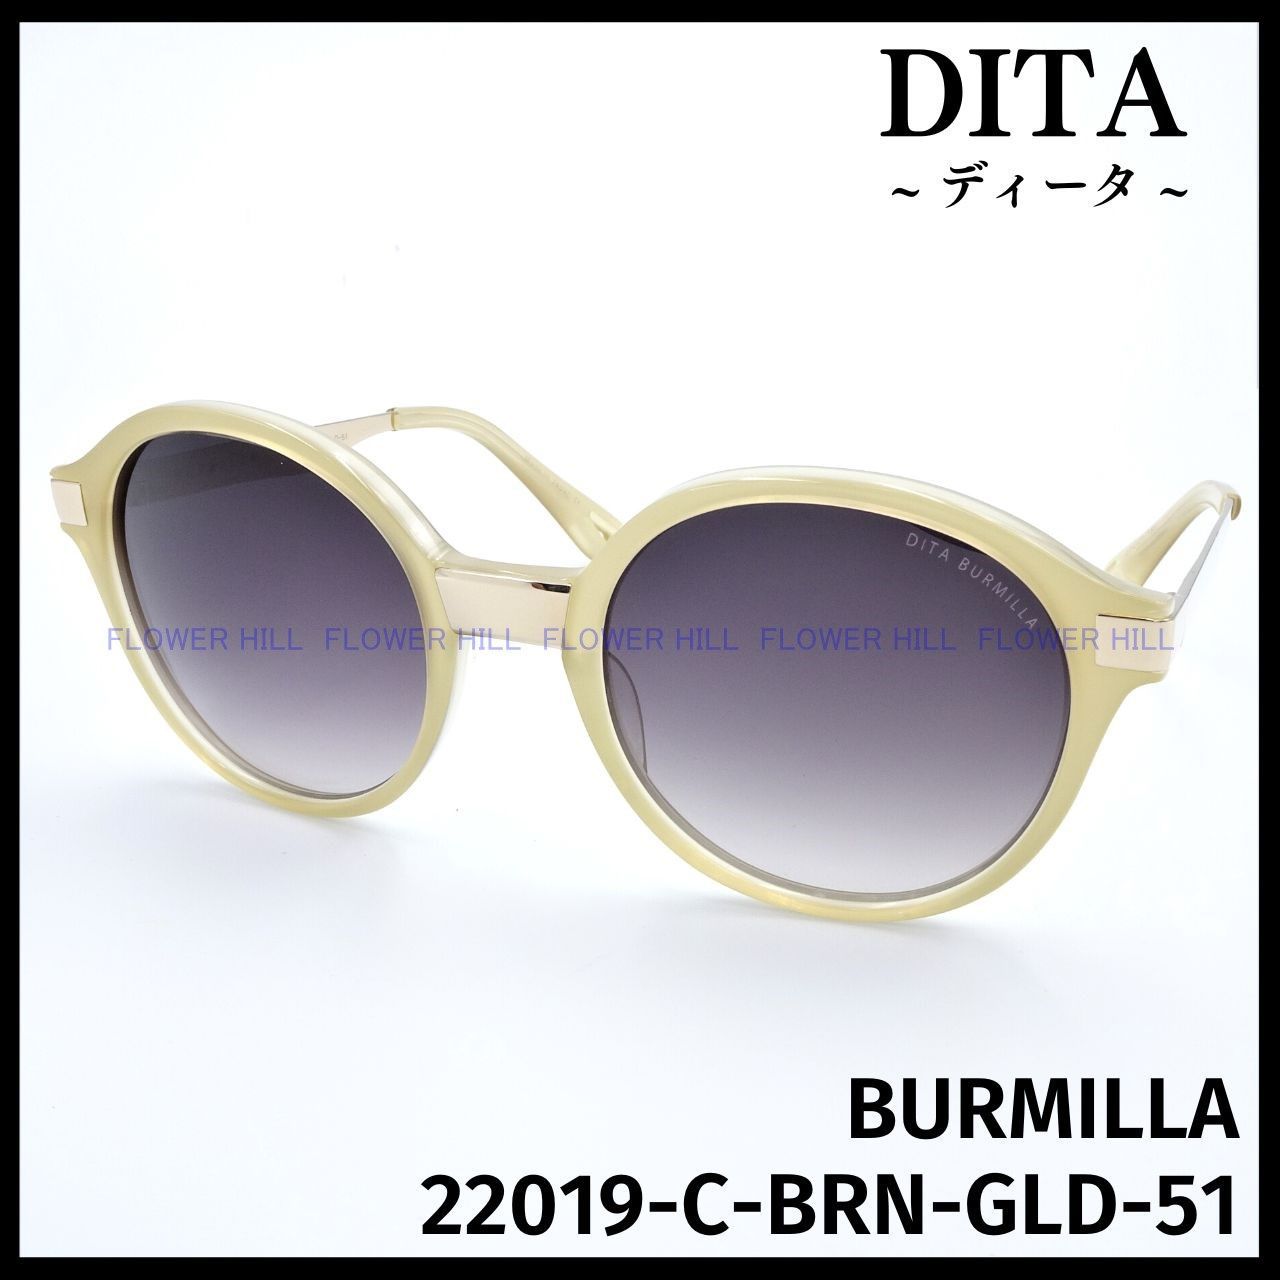 DITA サングラス BURMILLA 22019-C-BRN-GLD-51 - サングラス/メガネ